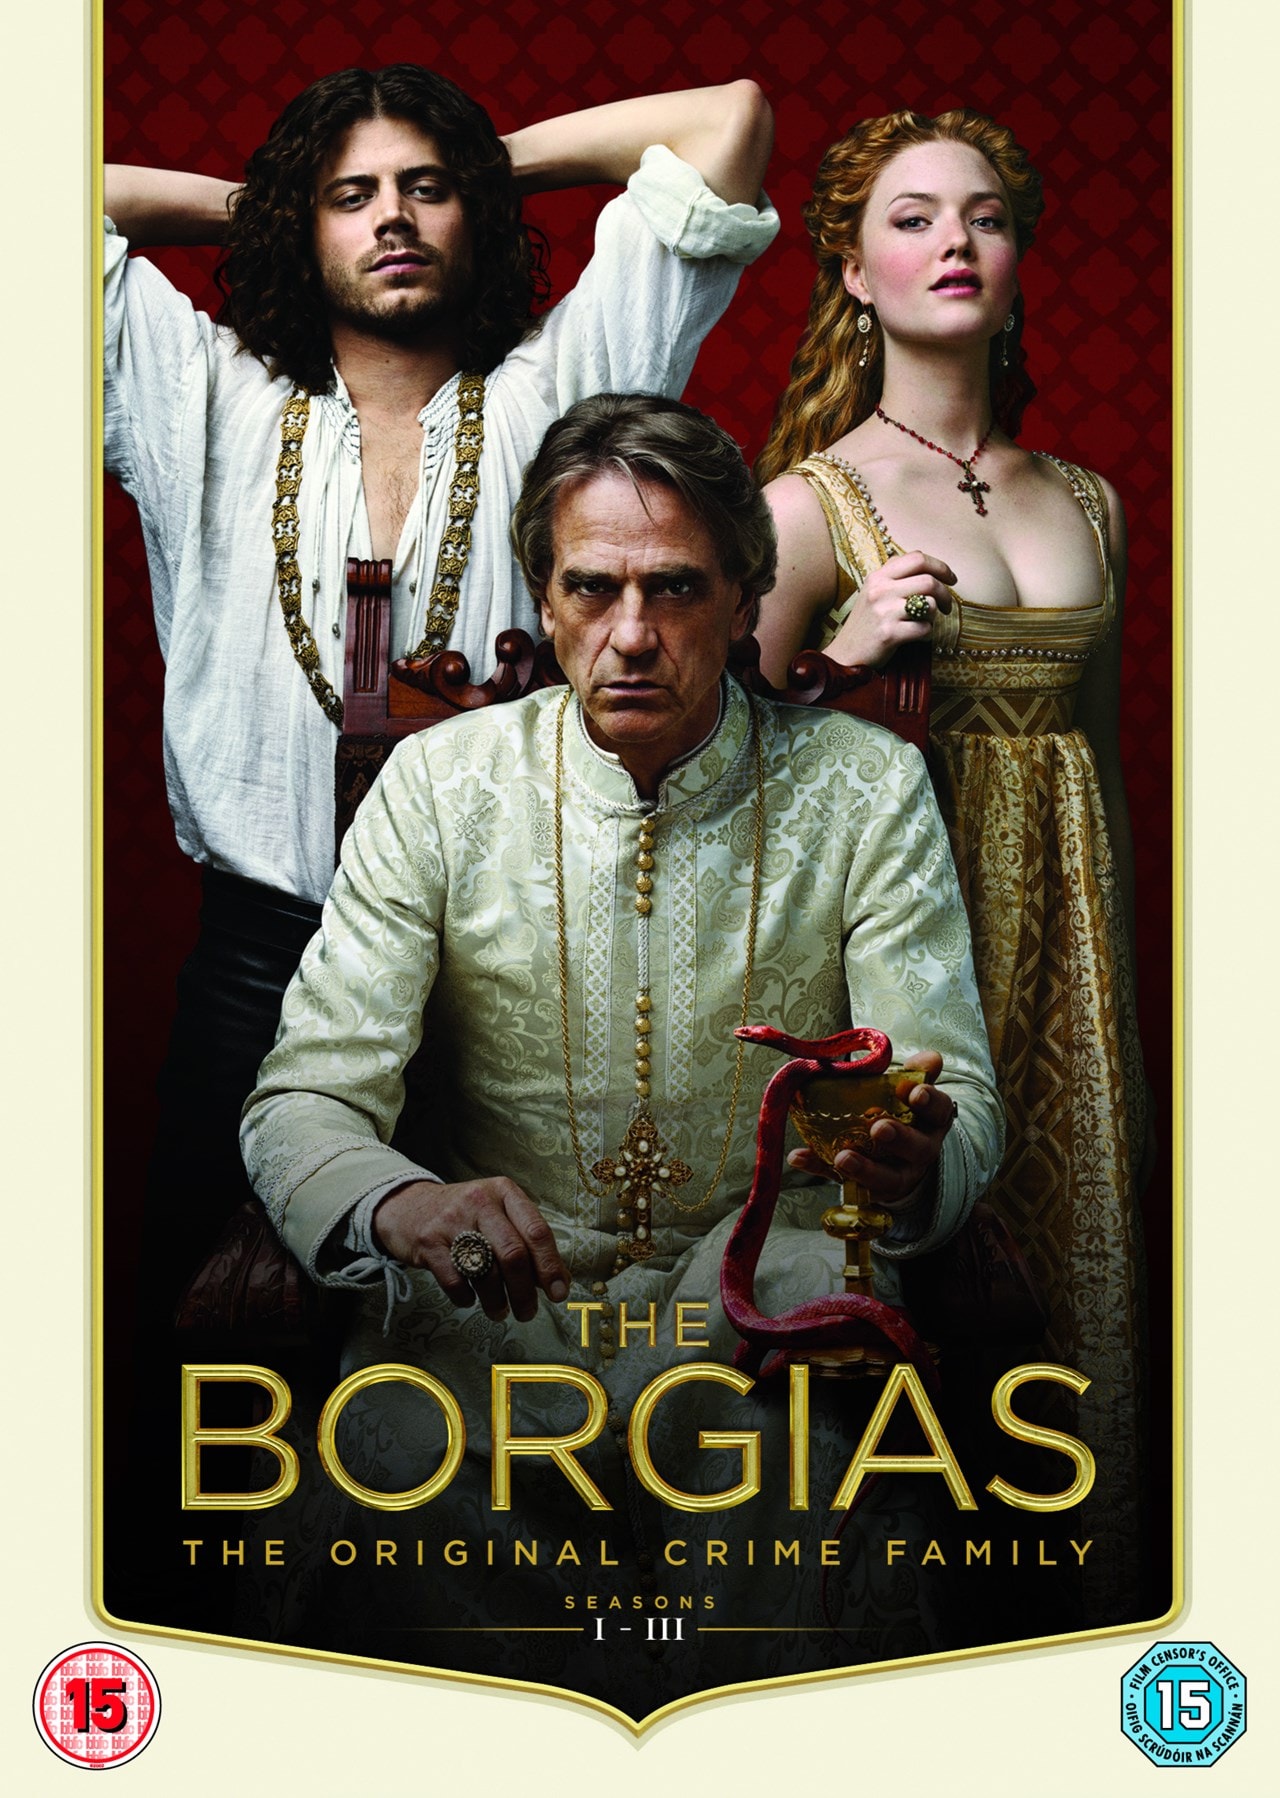 The Borgias Seasons 1 3 Dvd Box Set Free Shipping Over £20 Hmv Store